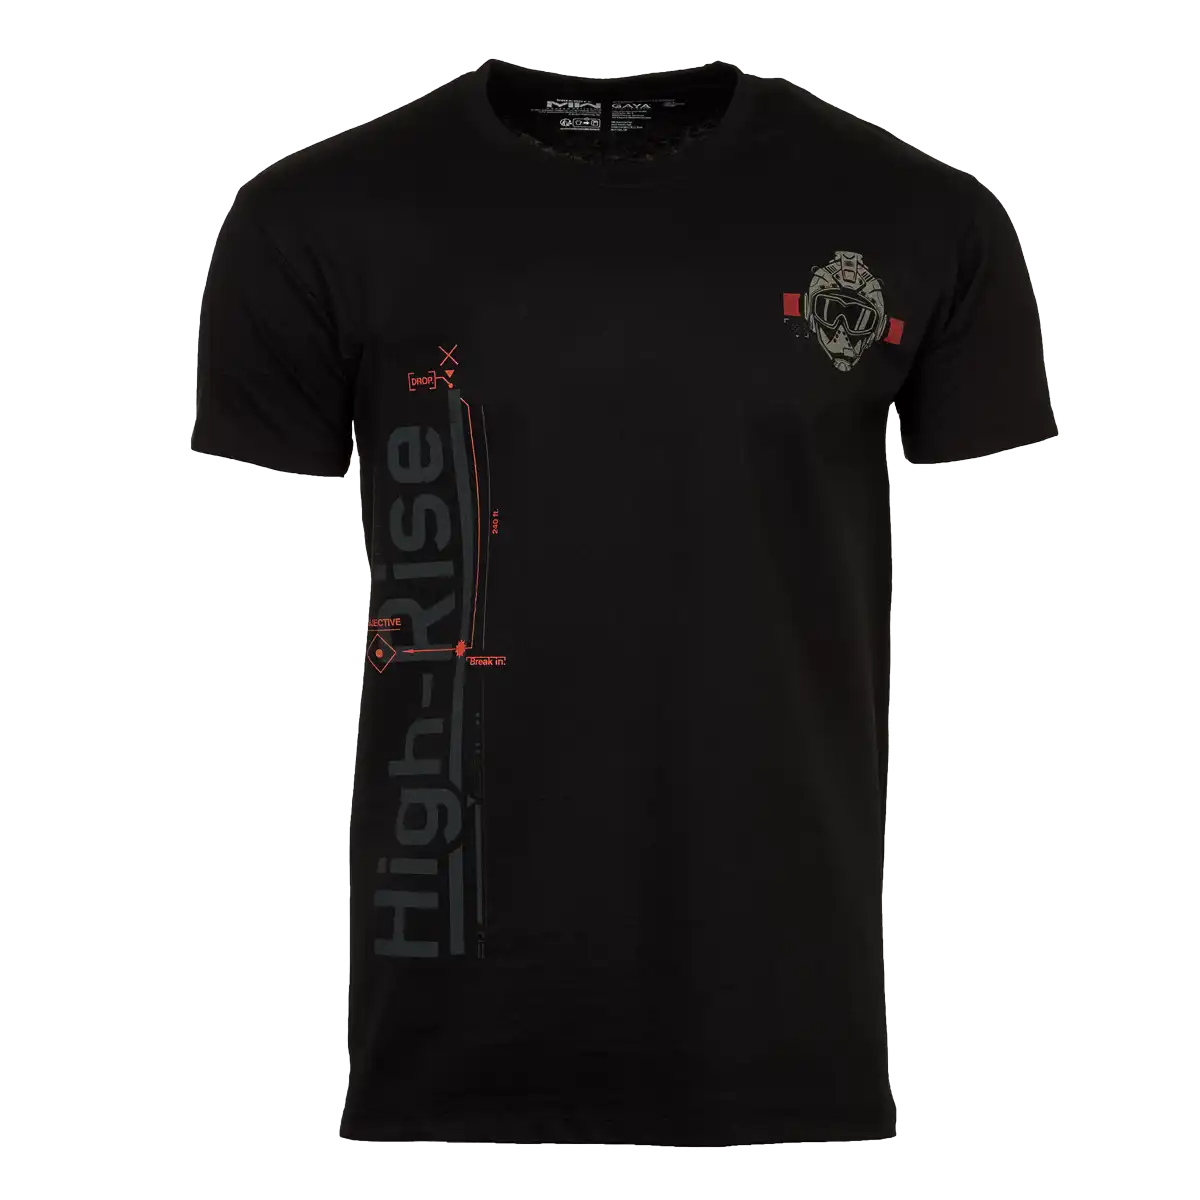 Call of Duty T-Shirt "High Rise" Black XL